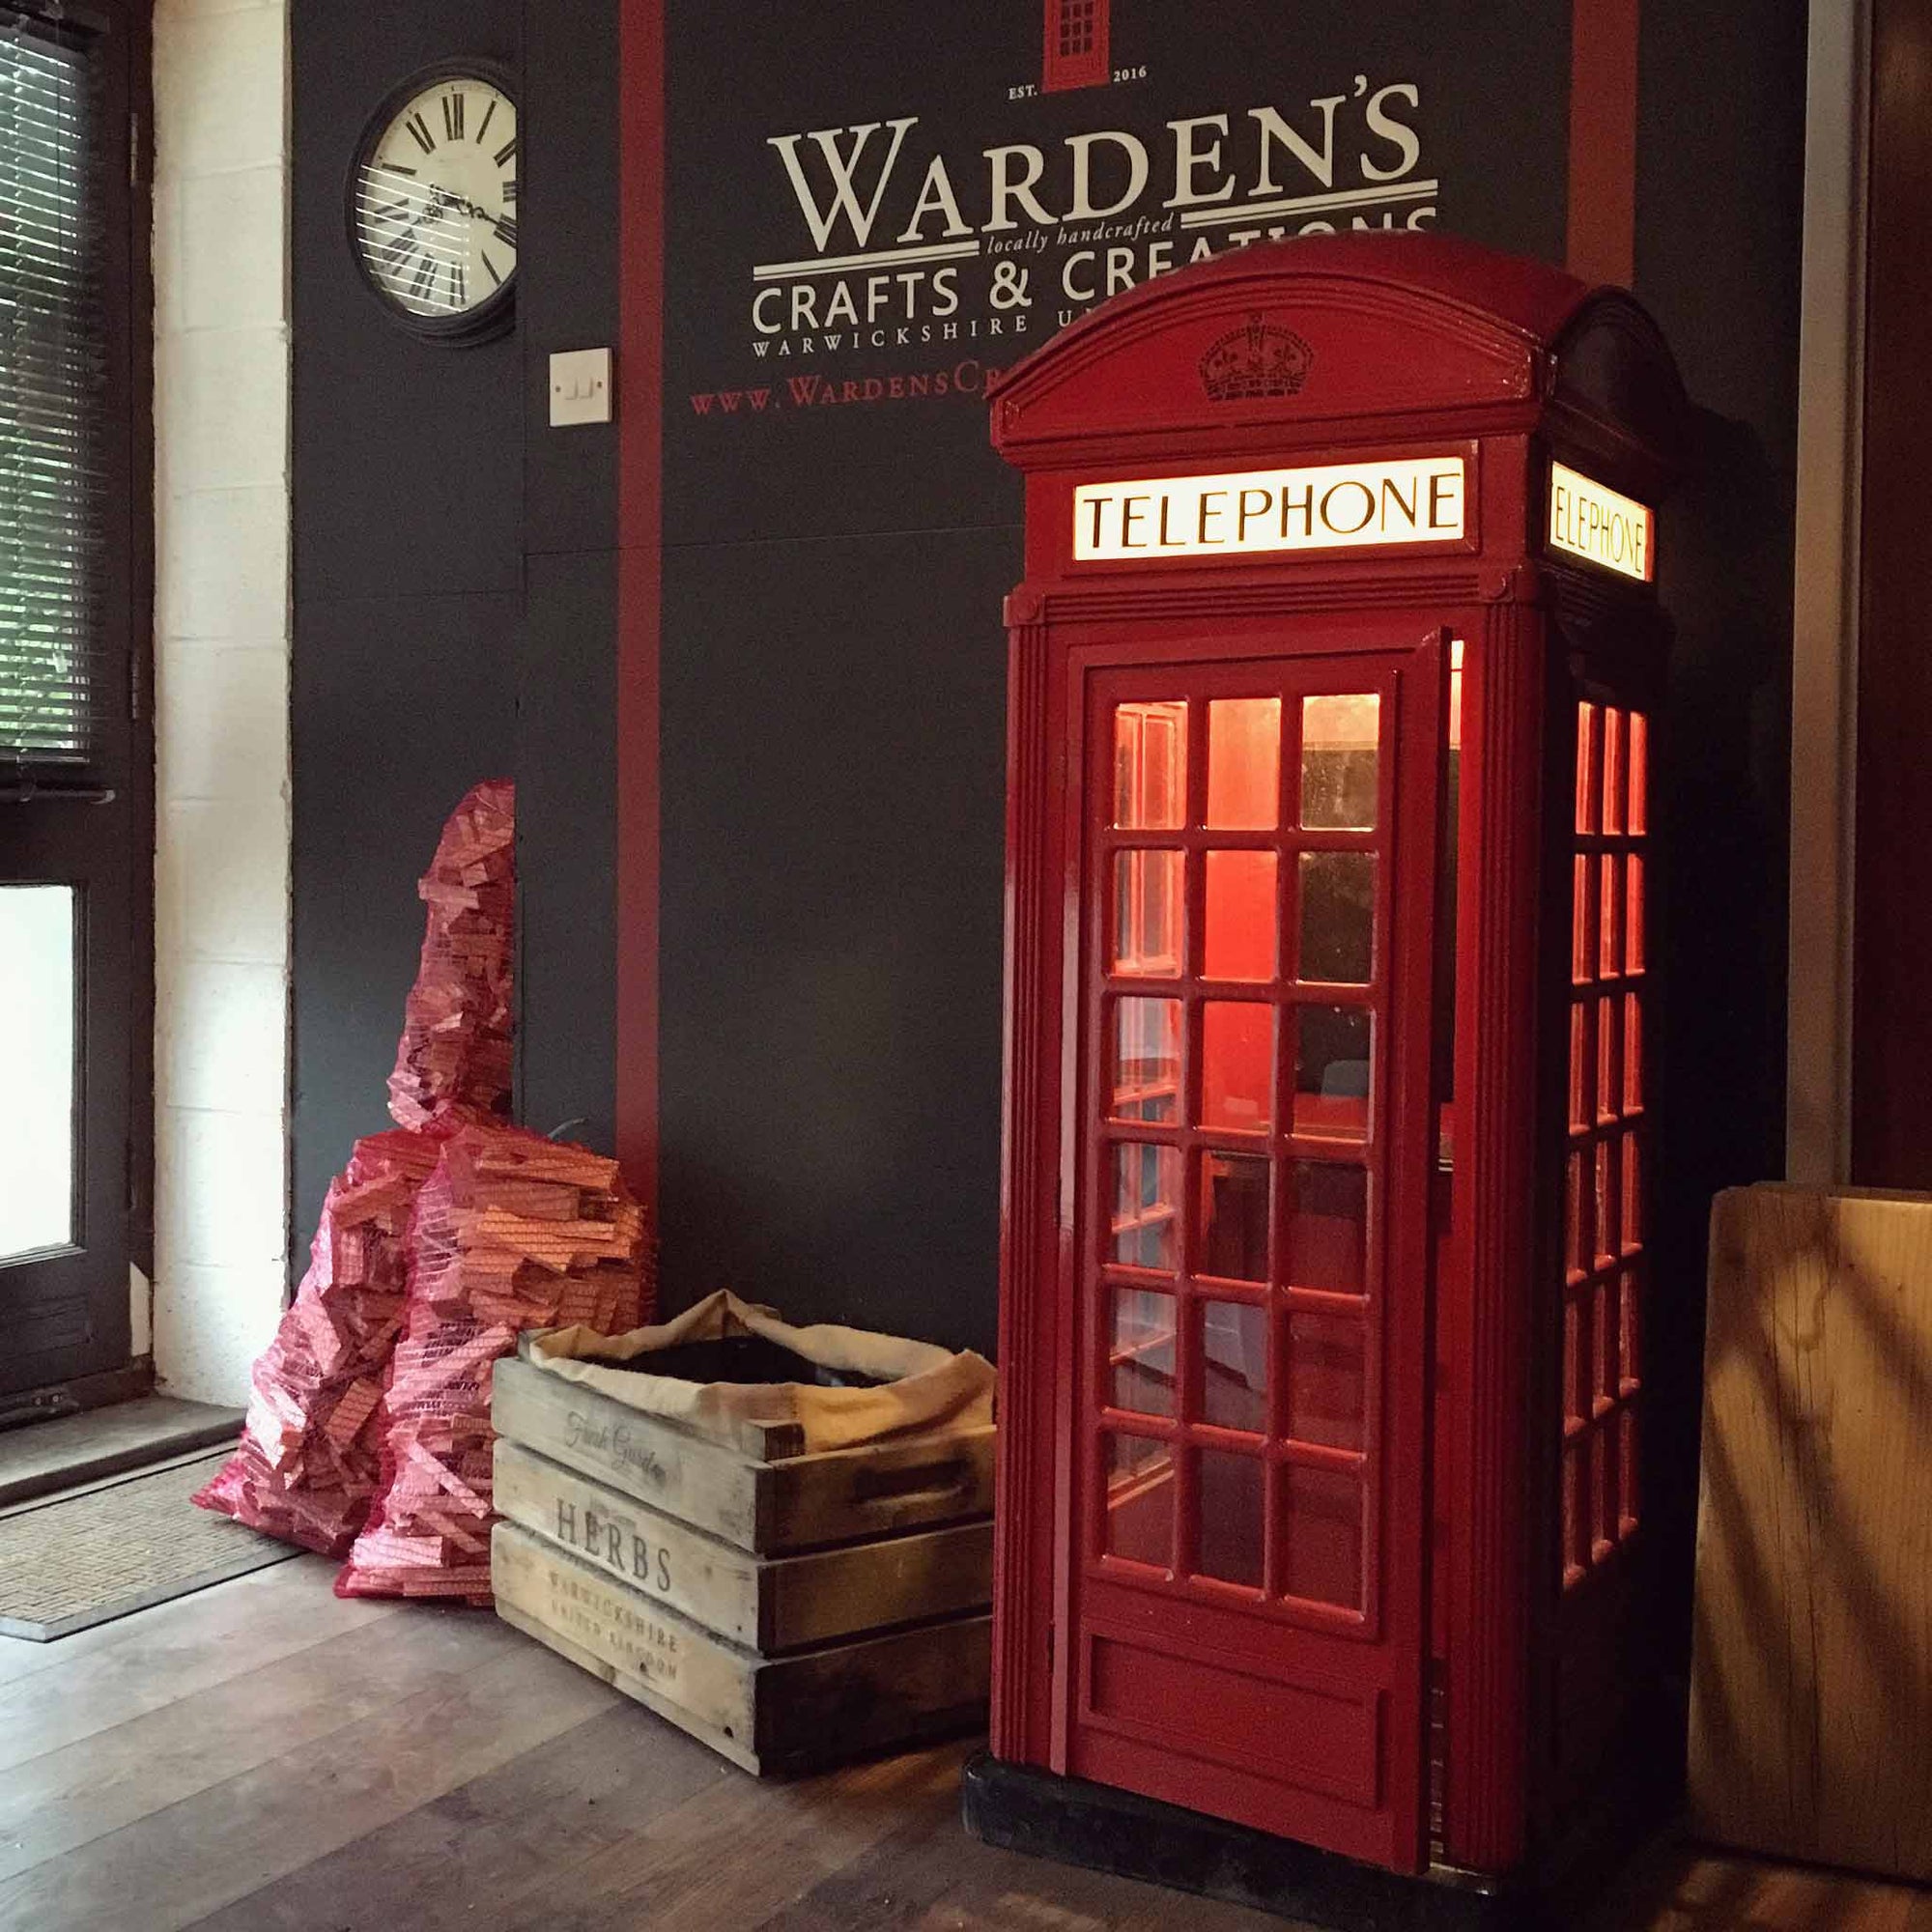 Red Telephone box | Half size | Garden ornament | Snow covered Telephone box | Warden's Crafts & Creations 